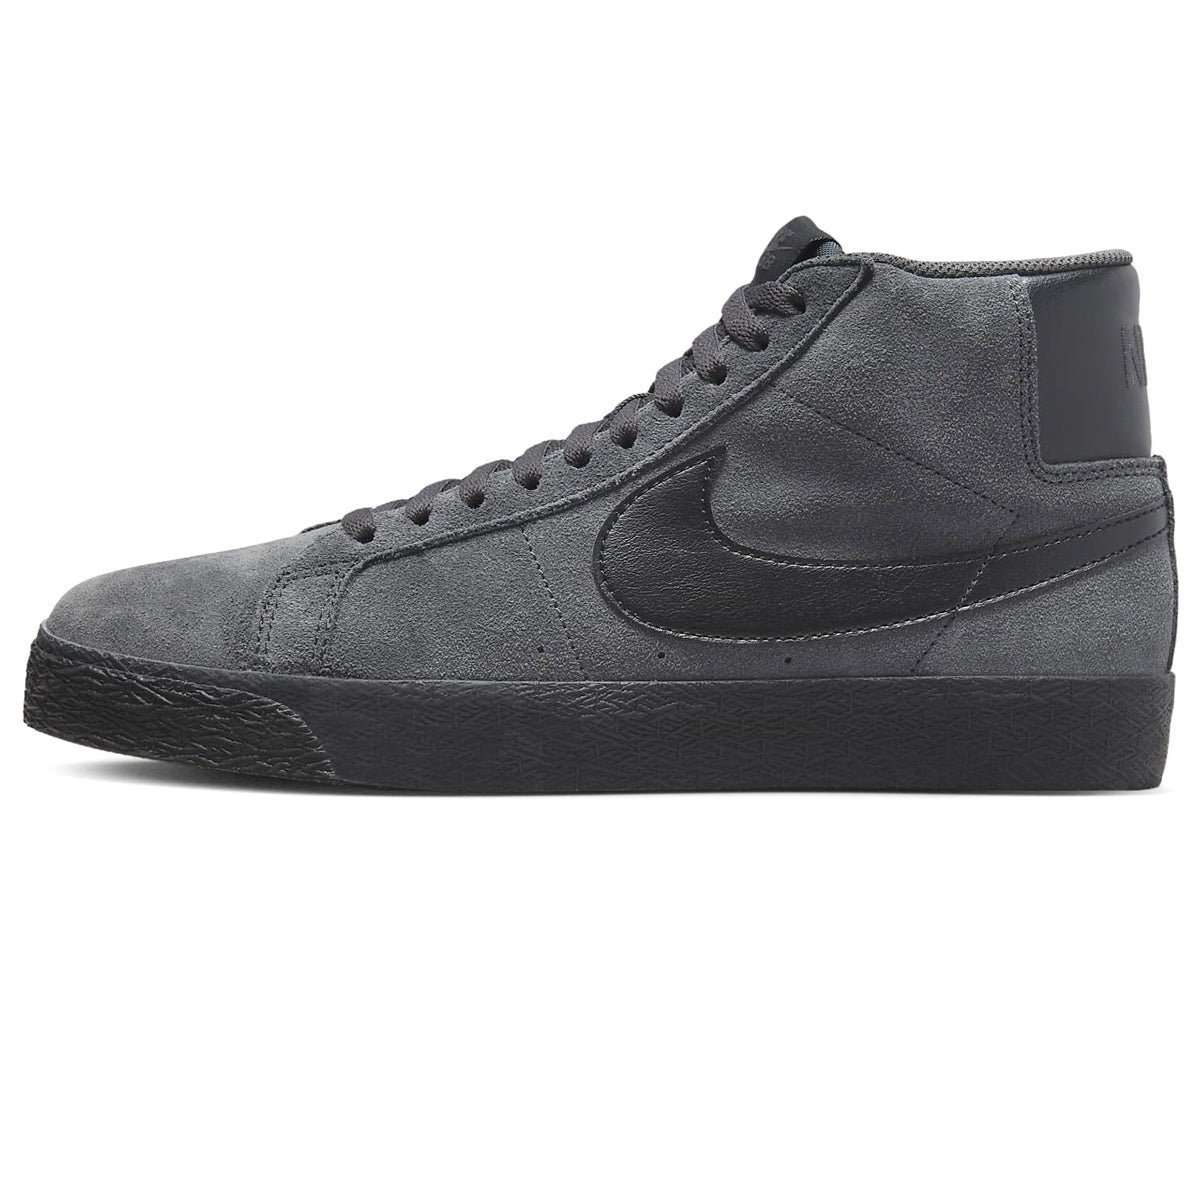 Nike SB Zoom Blazer Mid Shoes - Anthracite/Black/Anthracite/Black image 2